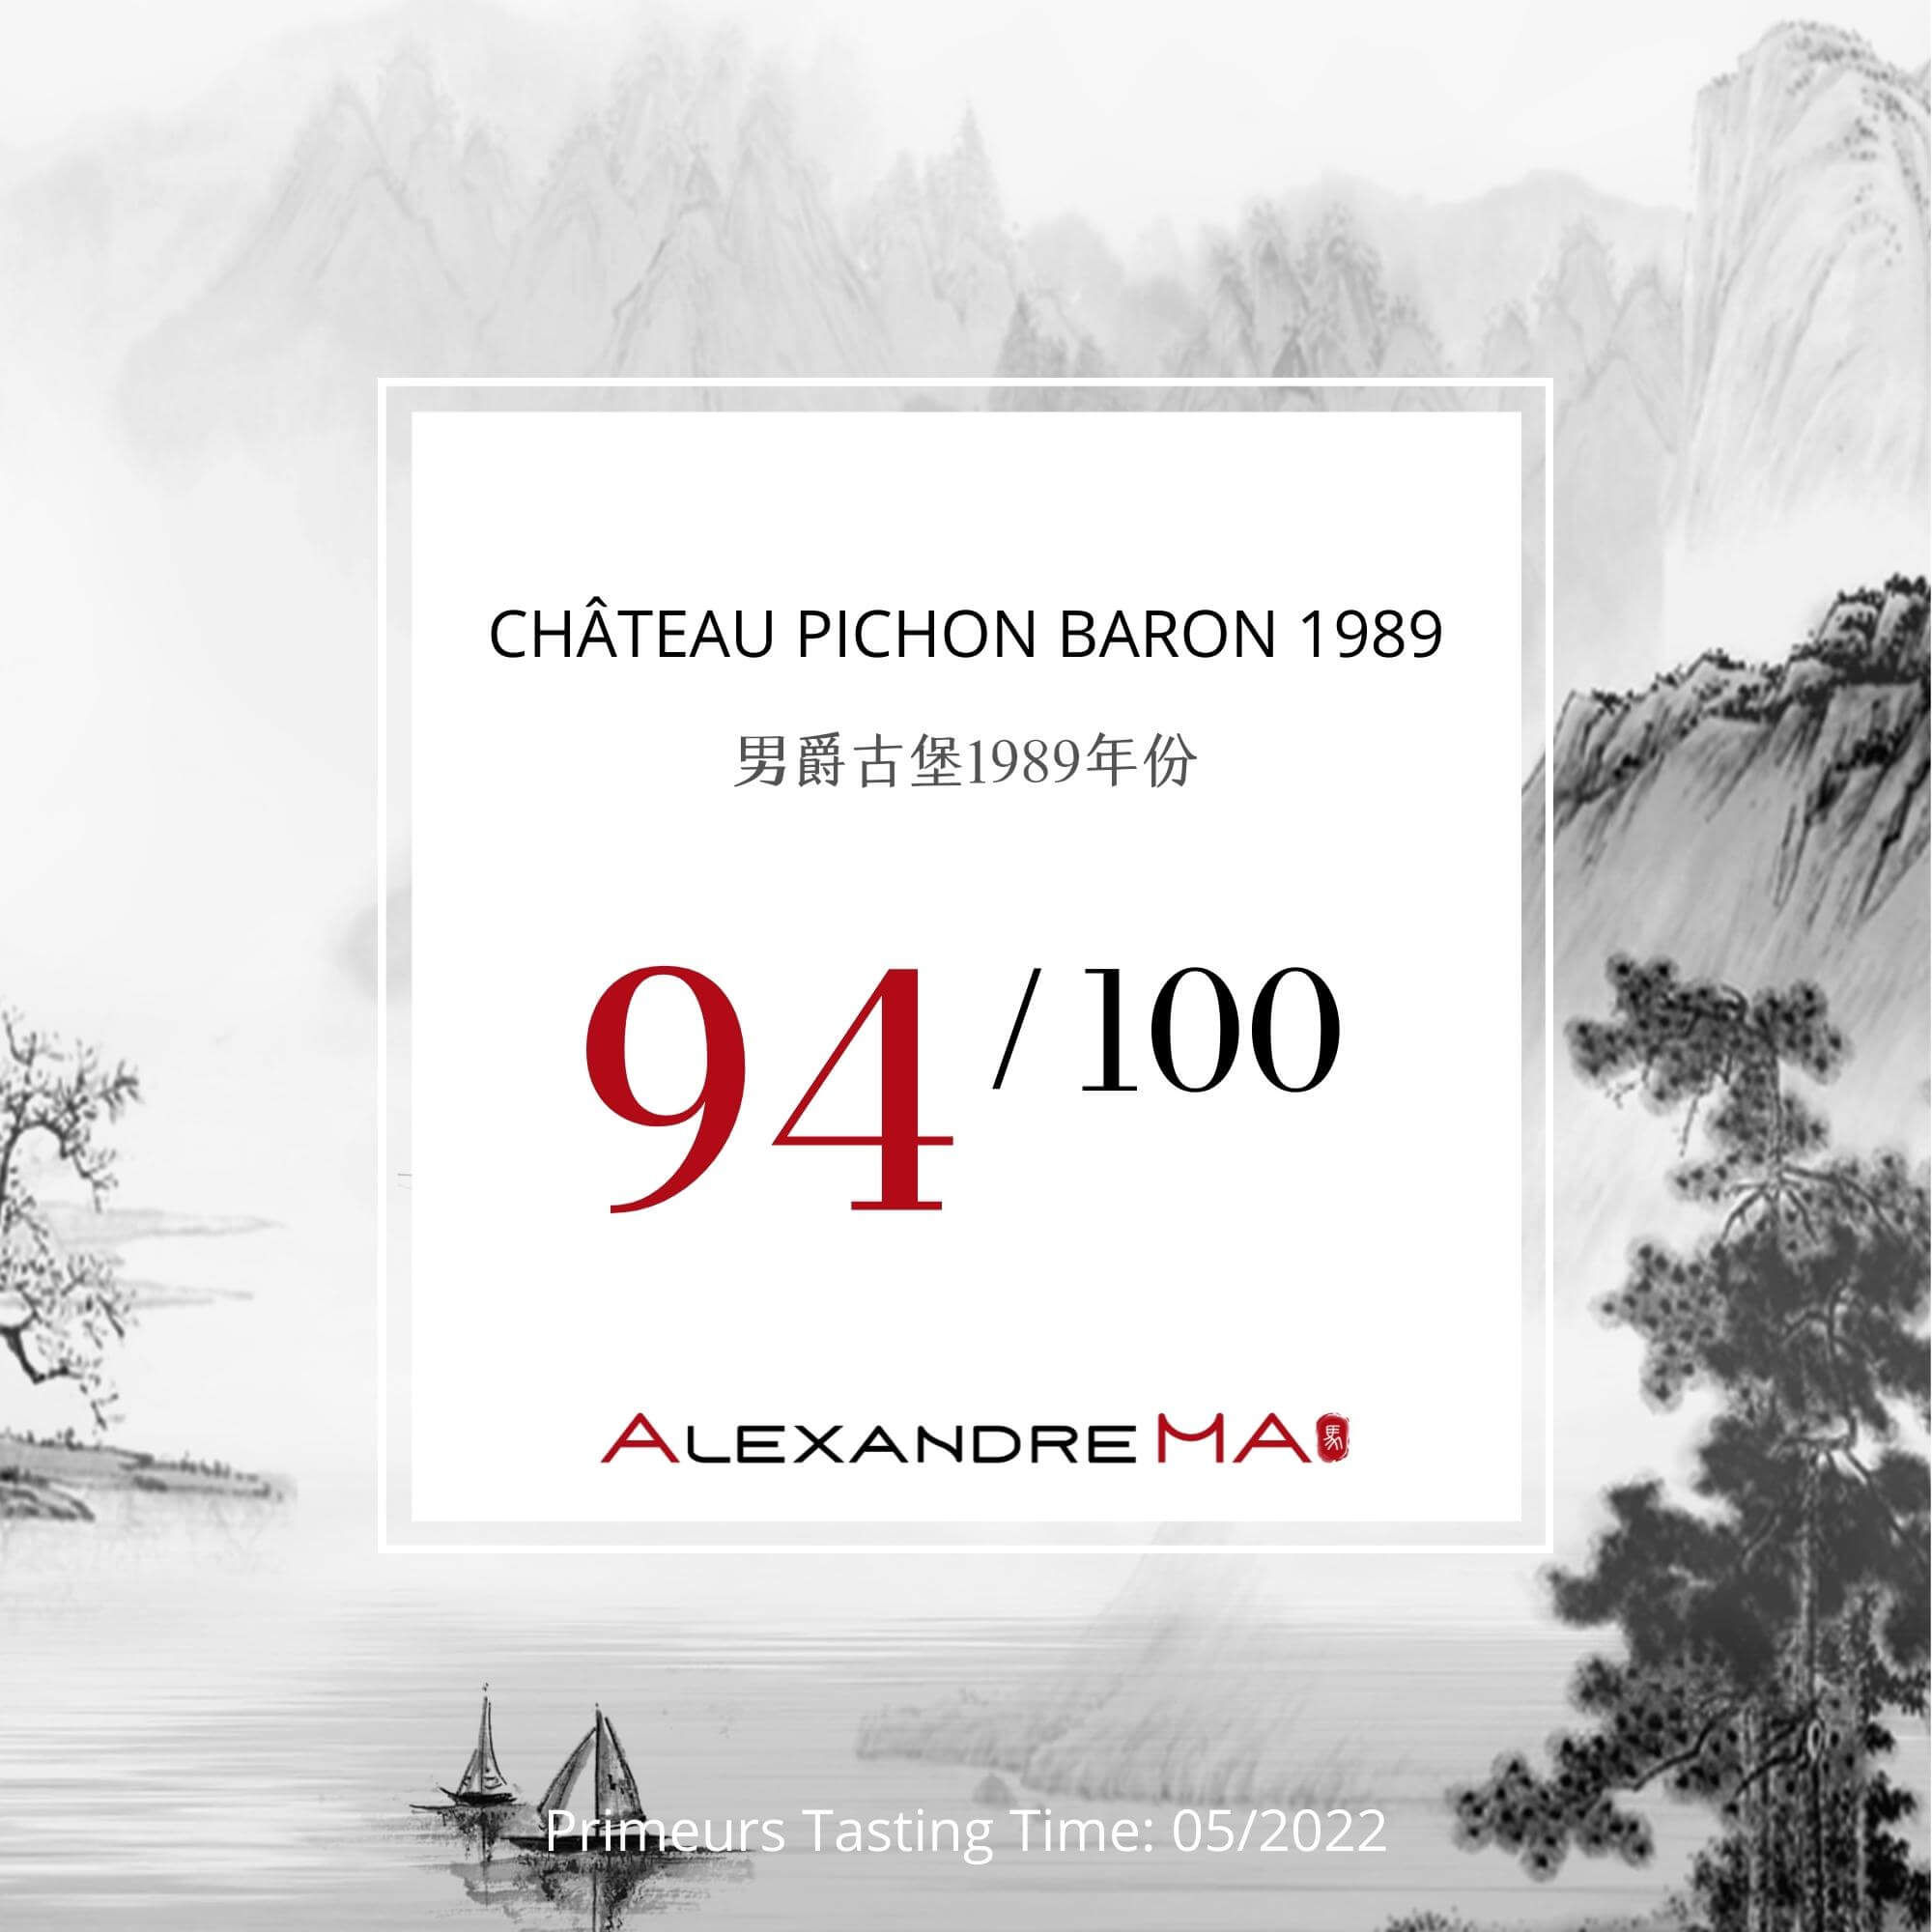 Château Pichon Baron 1989 - Alexandre MA